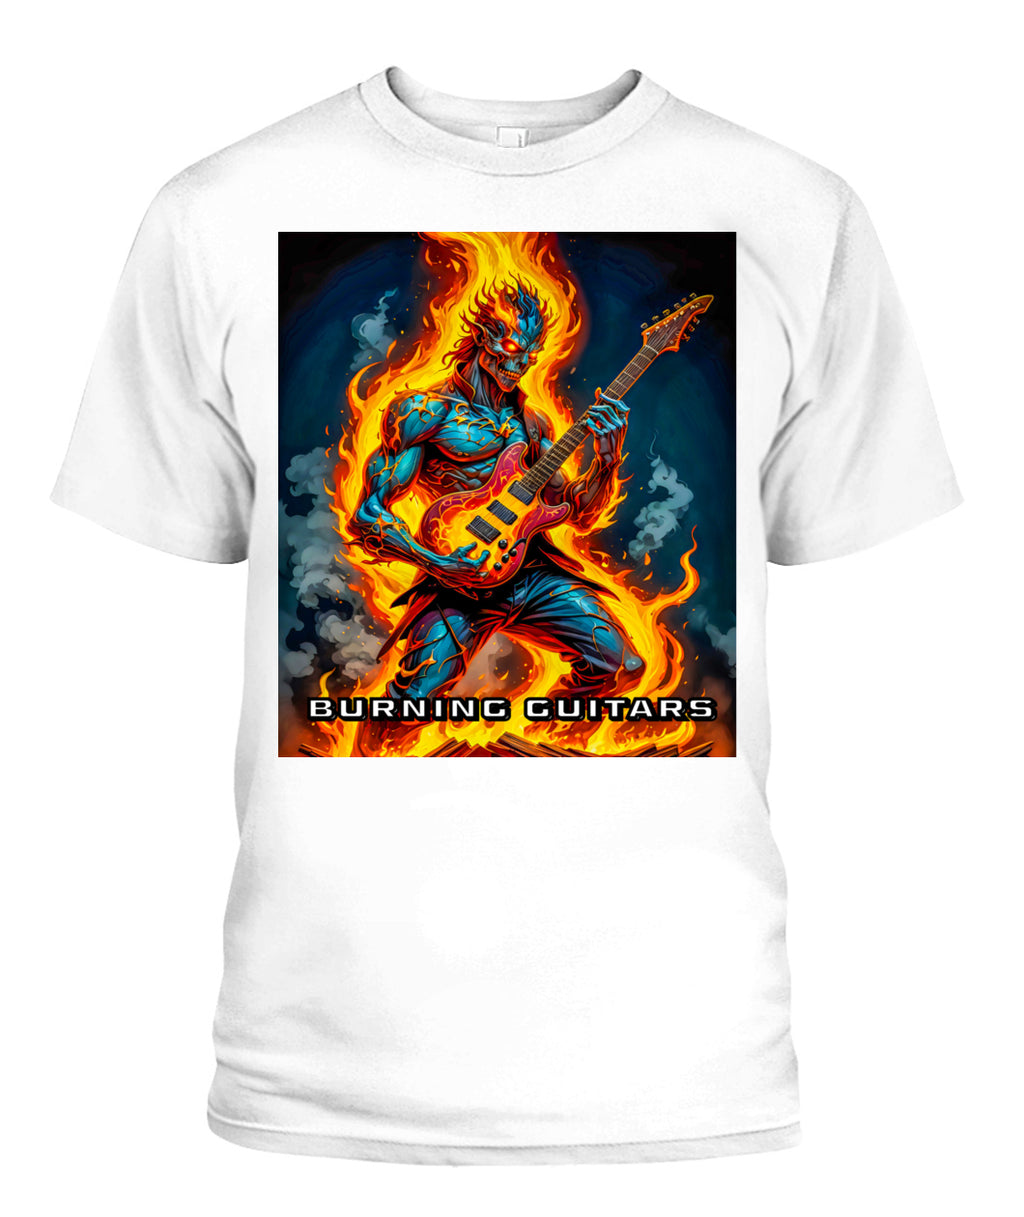 Black Demon Unisex T-Shirt by Burning Guitars